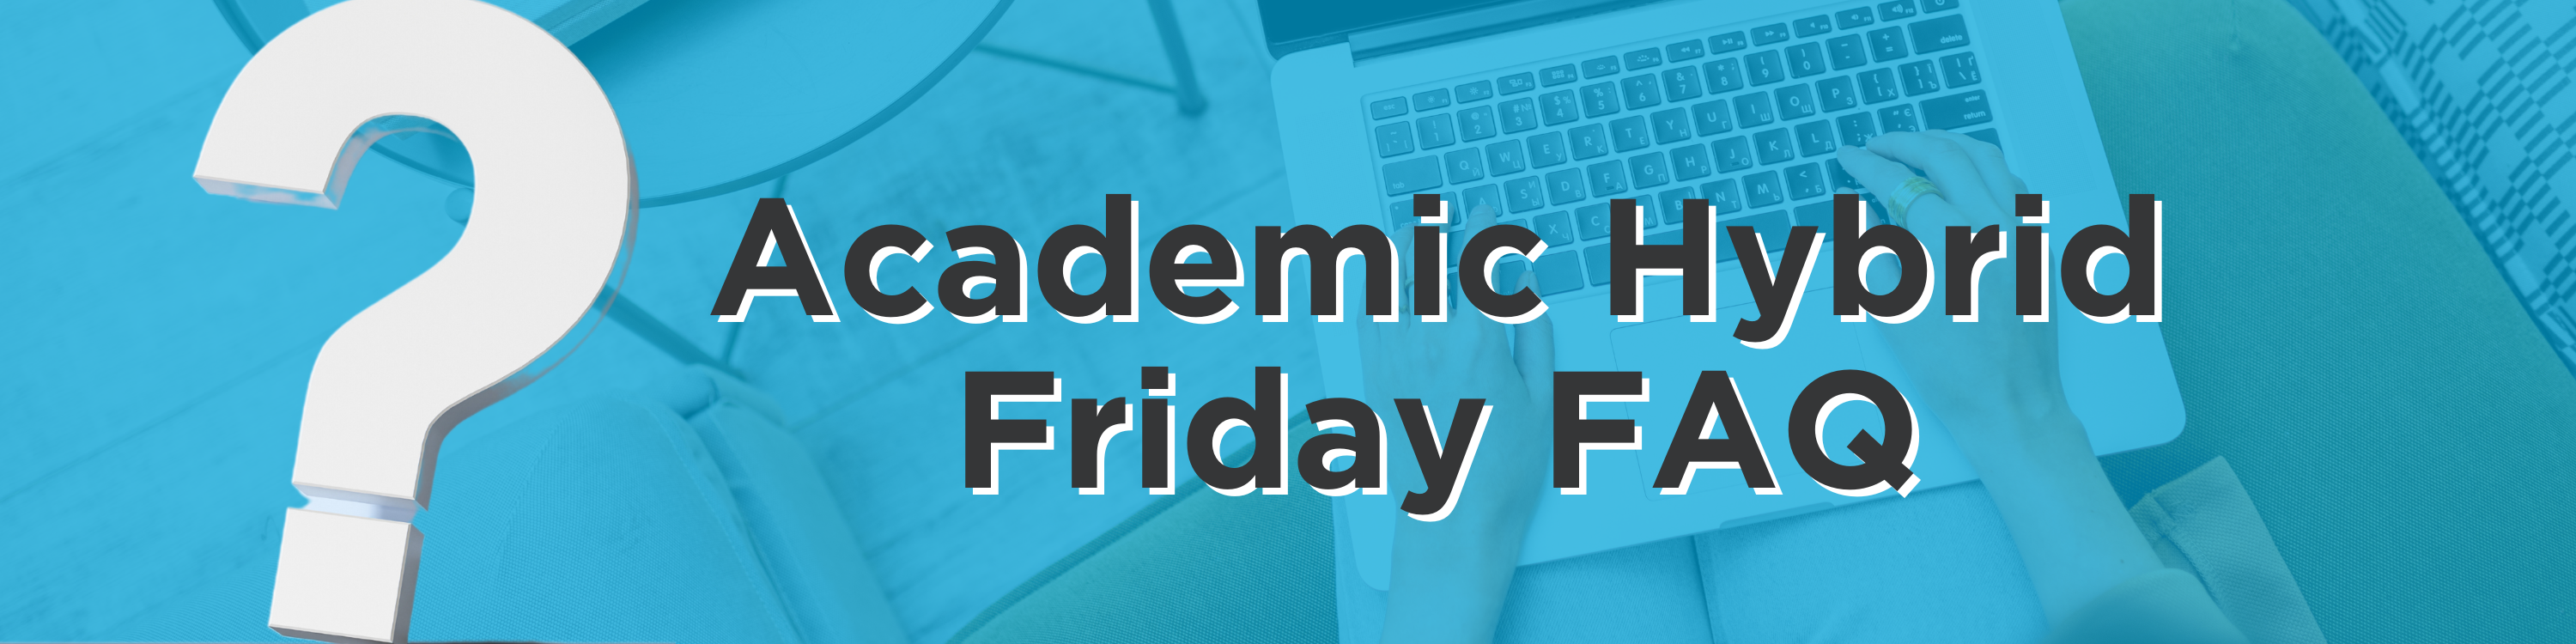 Academic Hybrid Friday FAQ